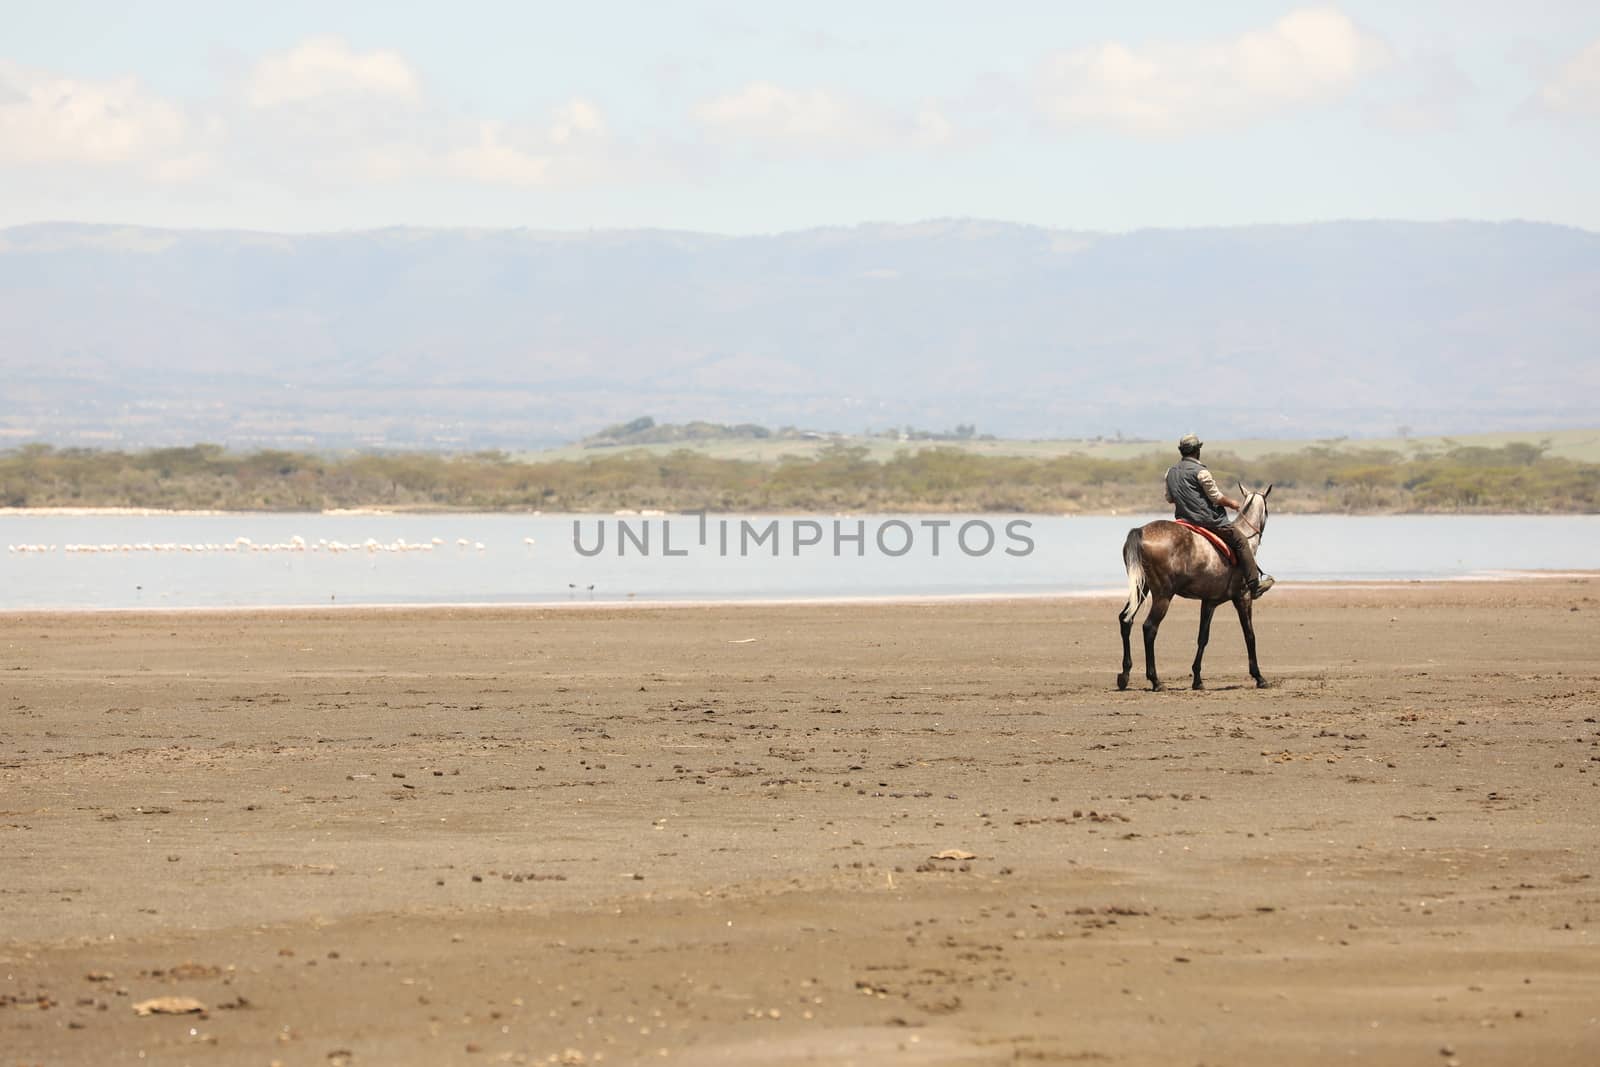 Horse Riding in water Masai Mara Kenya Africa